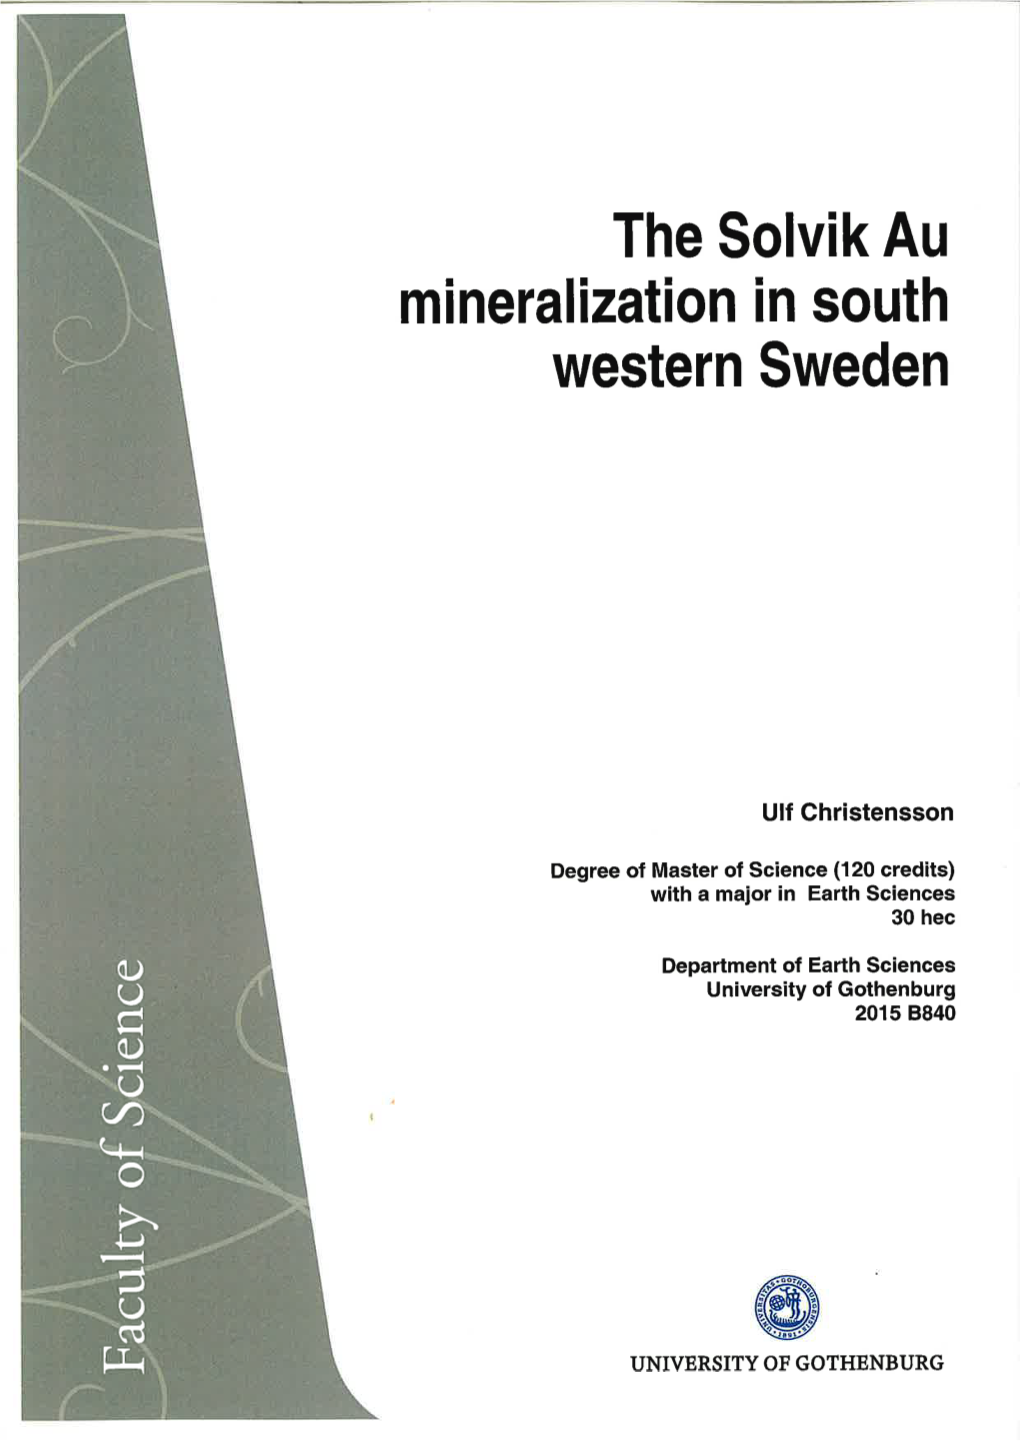 The Solvik Au Mineralization in South Western Sweden